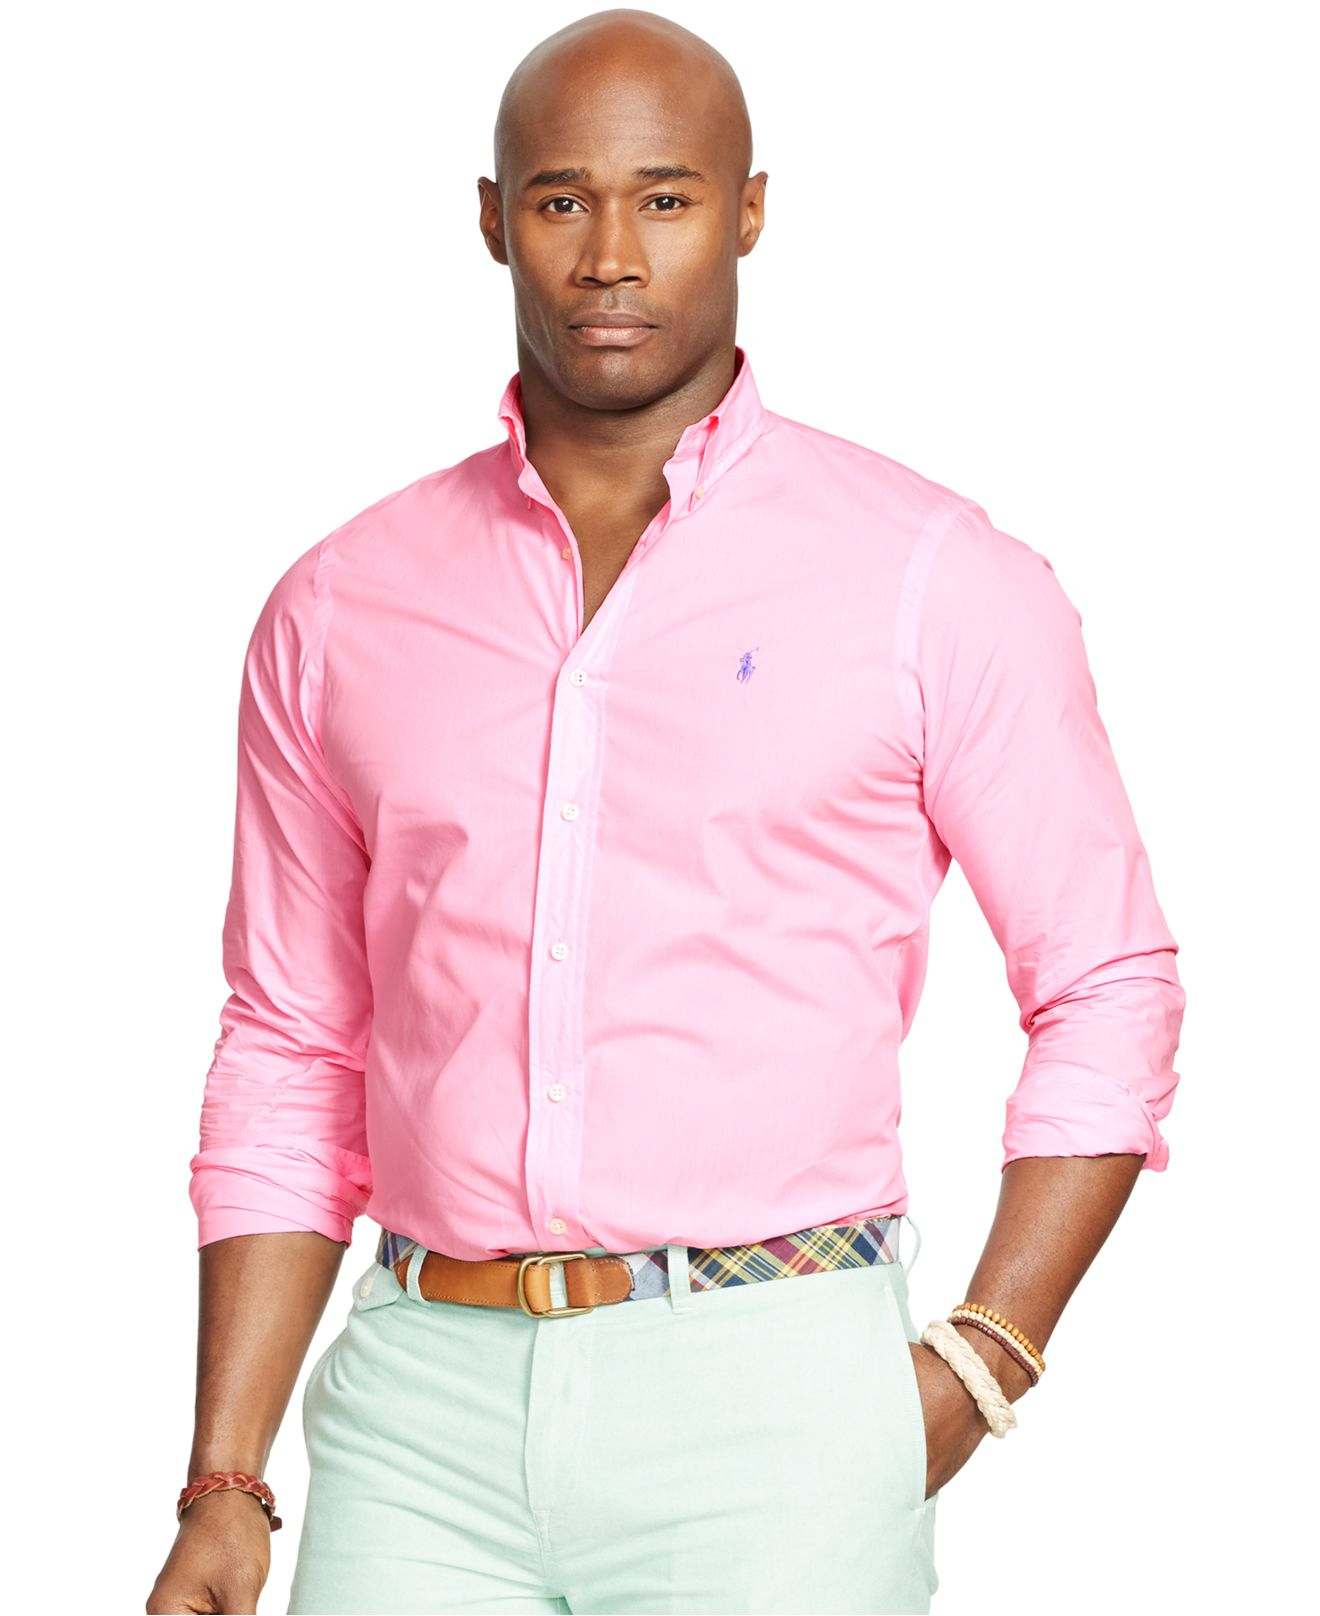 Lyst - Polo ralph lauren Big And Tall Long-Sleeve Poplin Shirt in Pink ...